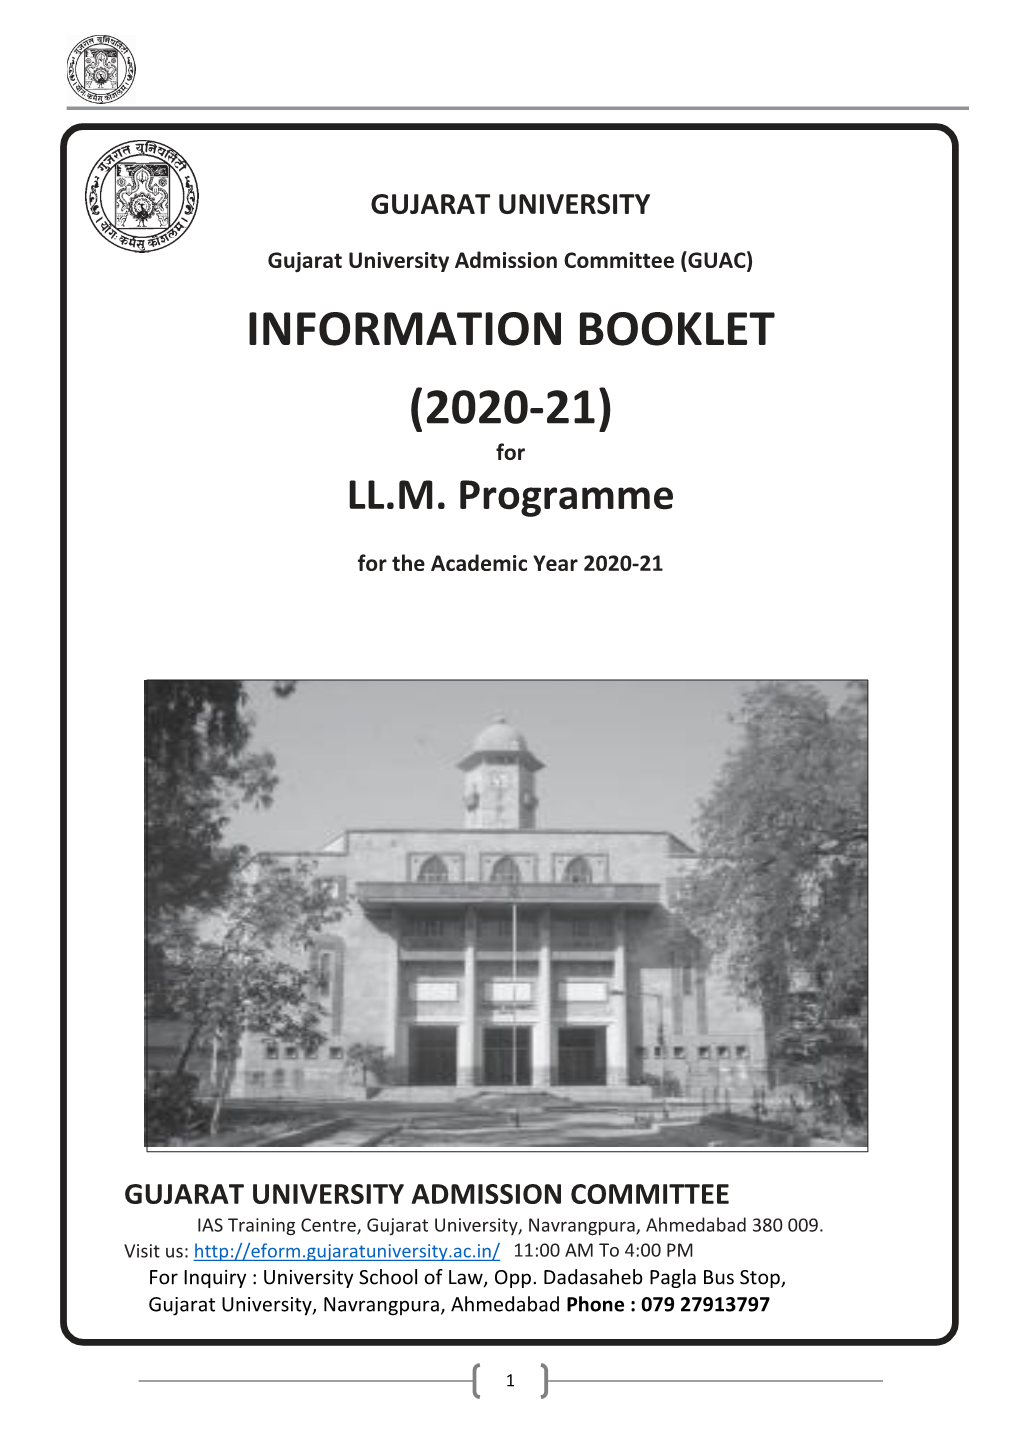 INFORMATION BOOKLET (2020-21) for LL.M